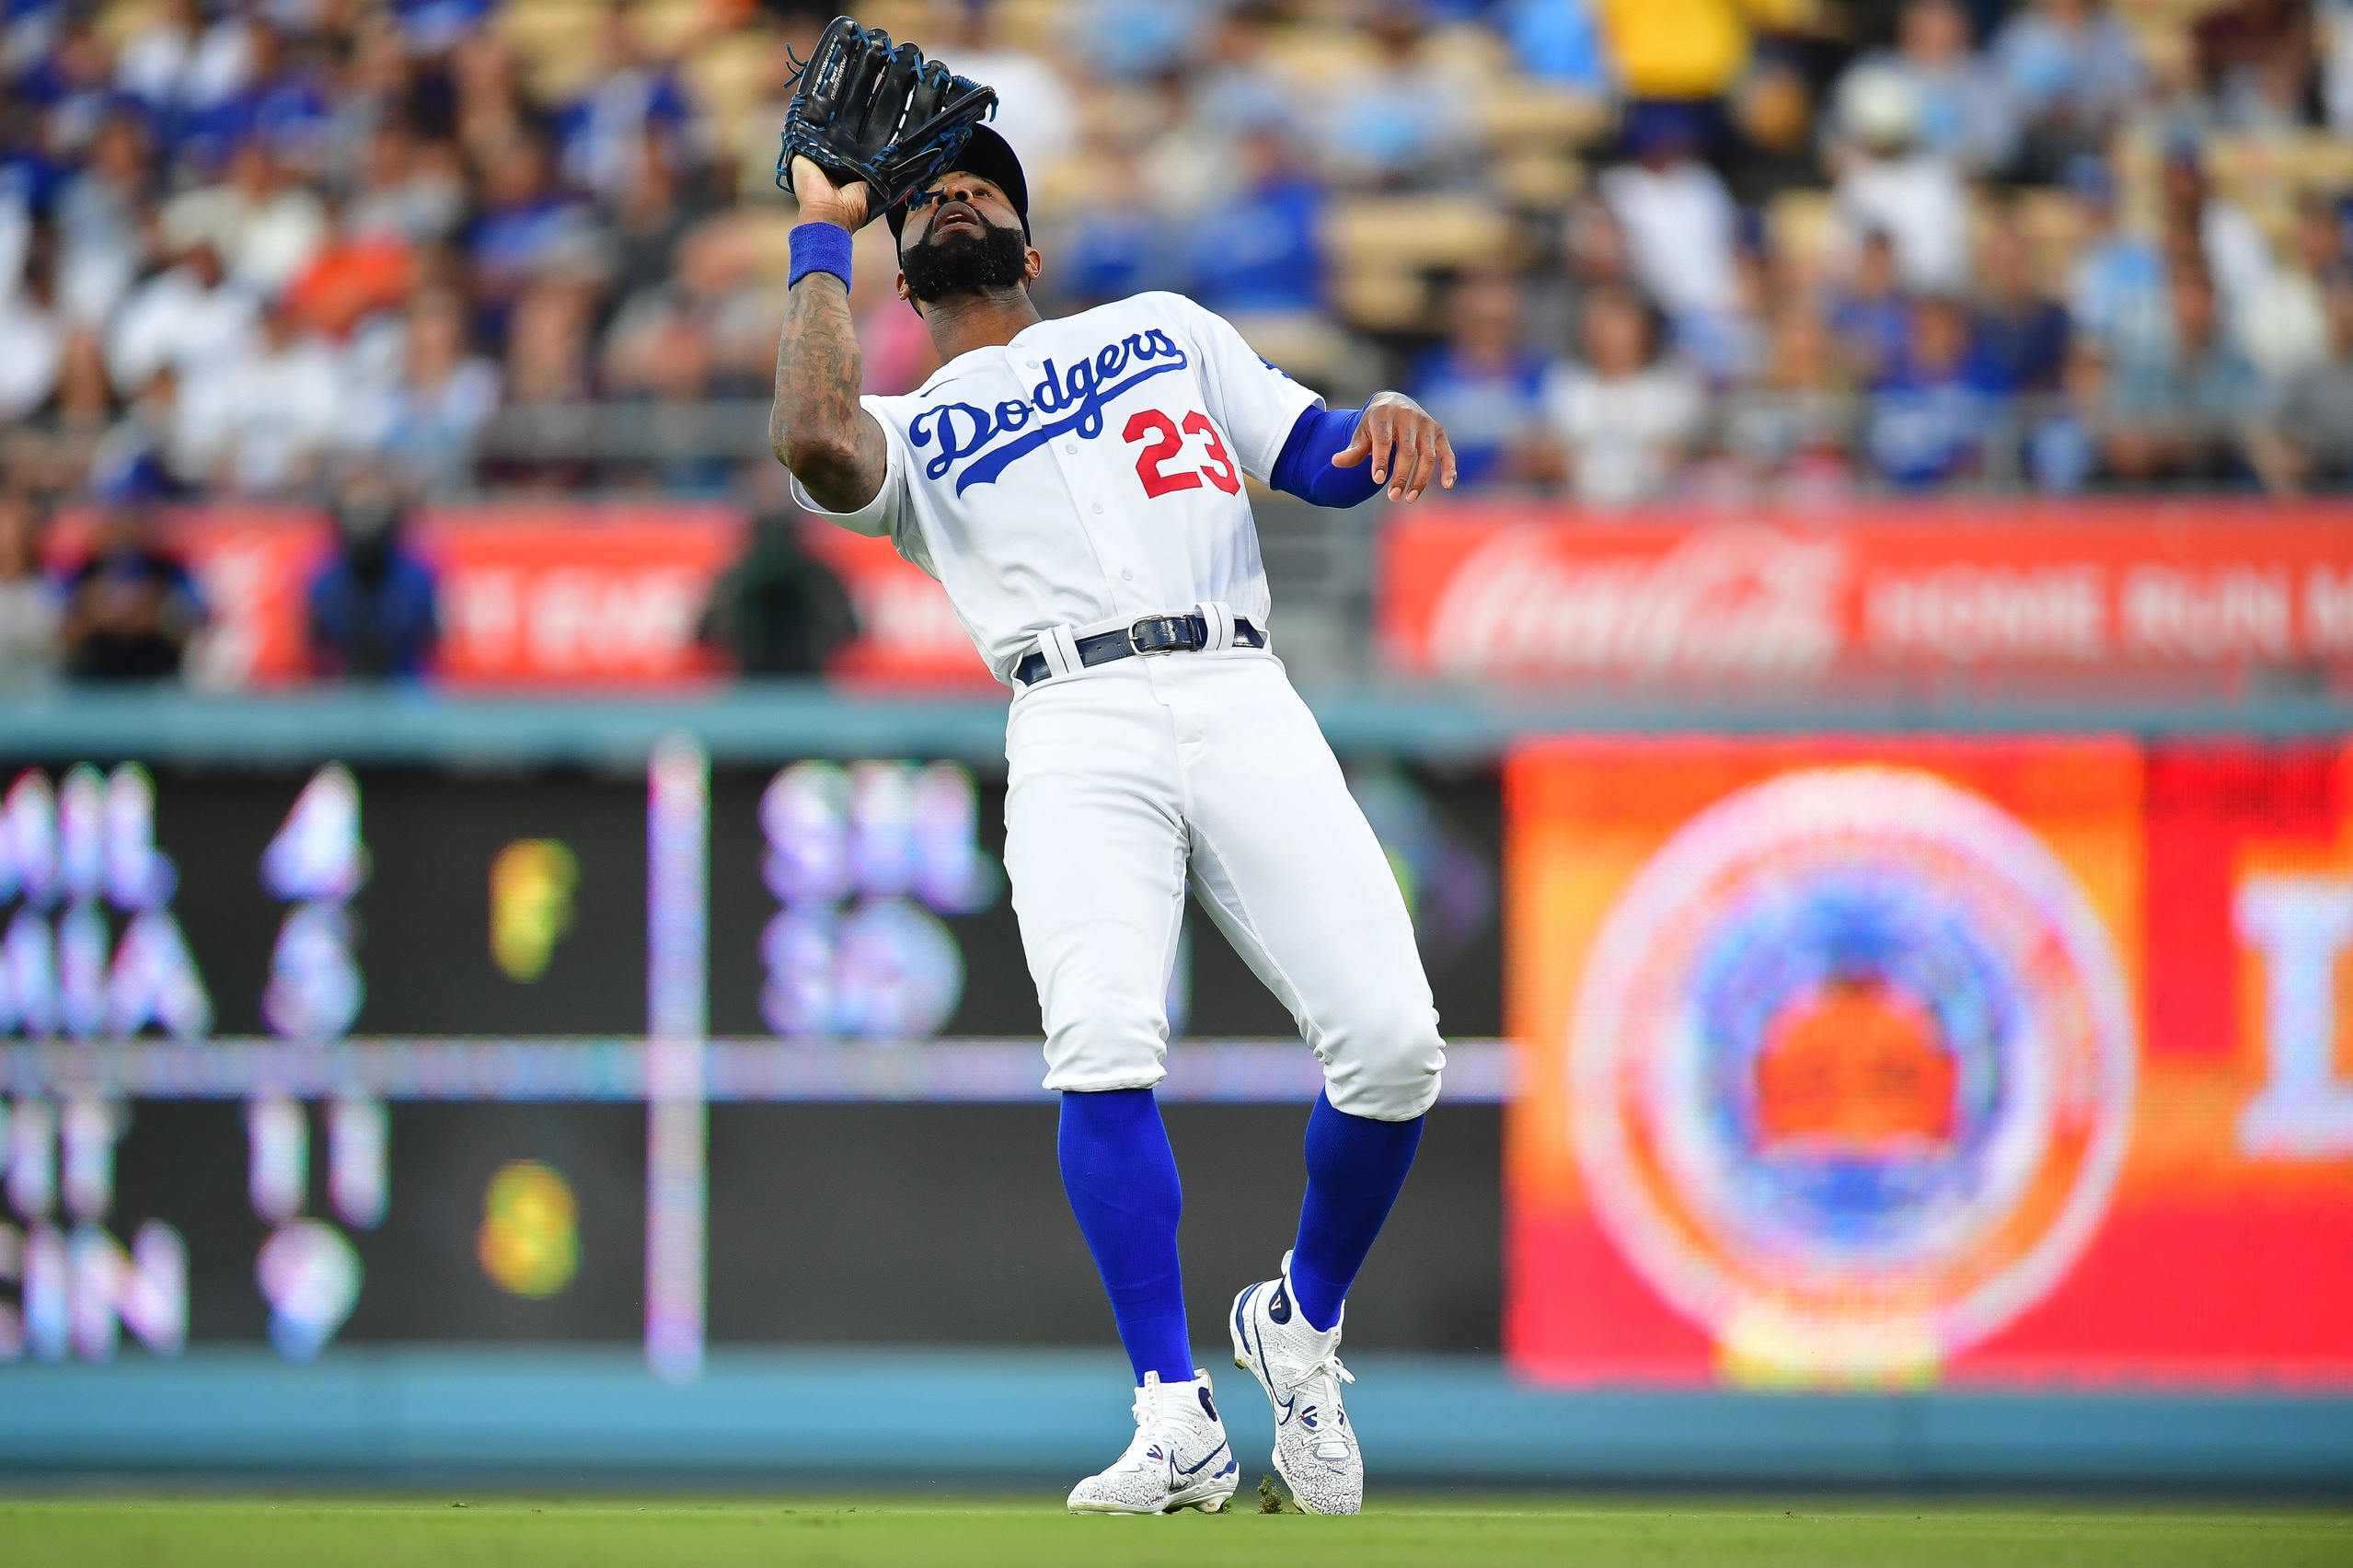 Dodgers News: Andrew Freidman Opens Up On Jason Heyward’s ‘Trust Fall’ with LA